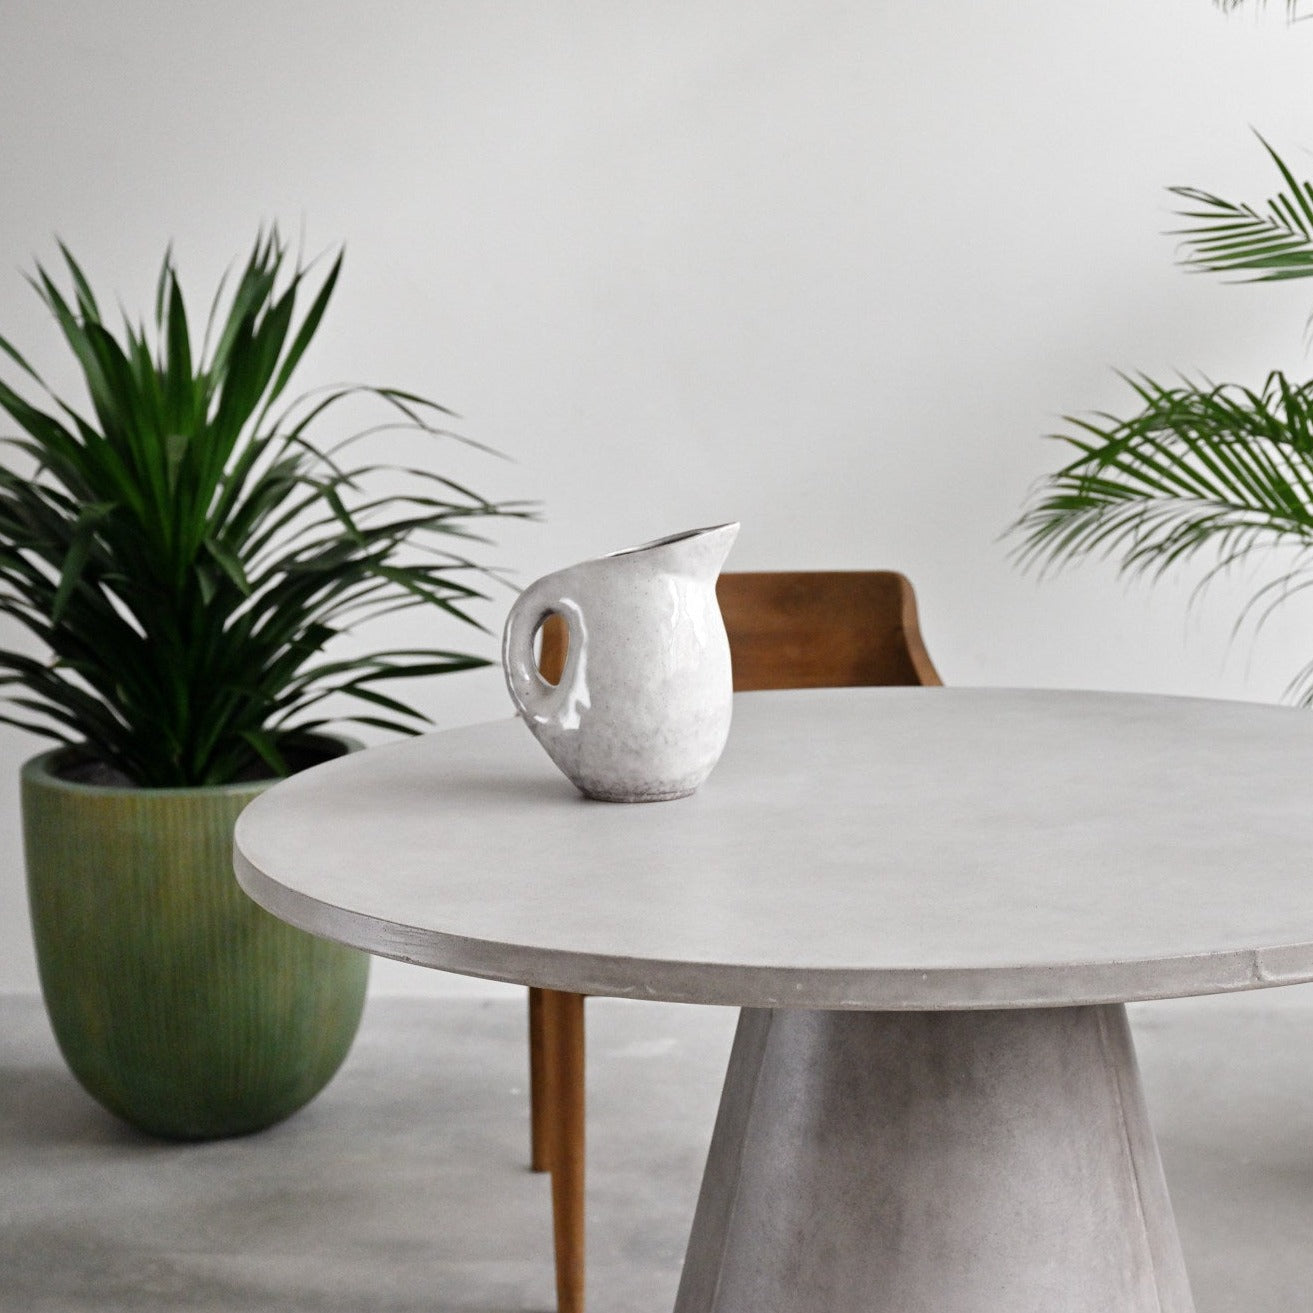 Savoca Concrete Dining Table - 120cm